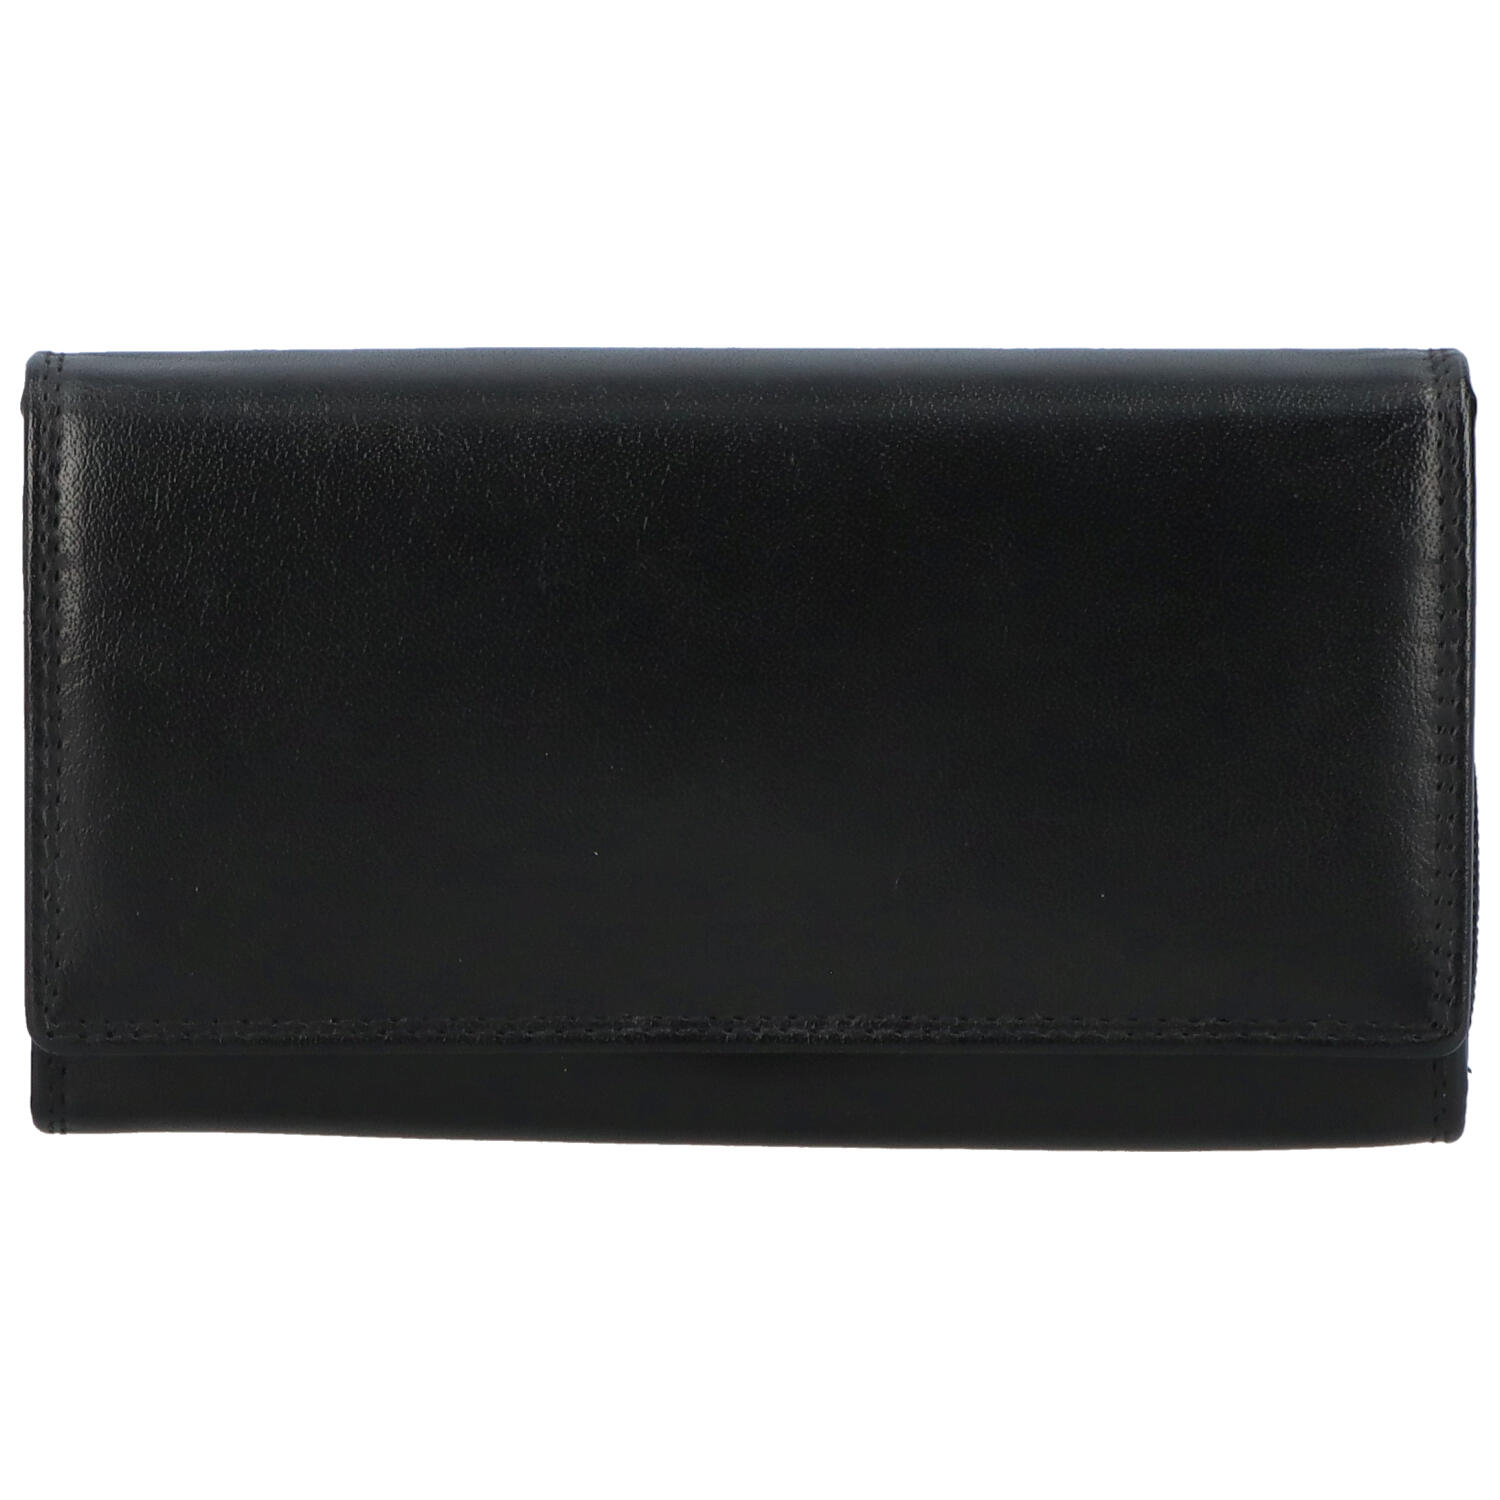 Kožená peněženka černá - Tomas Berfekta